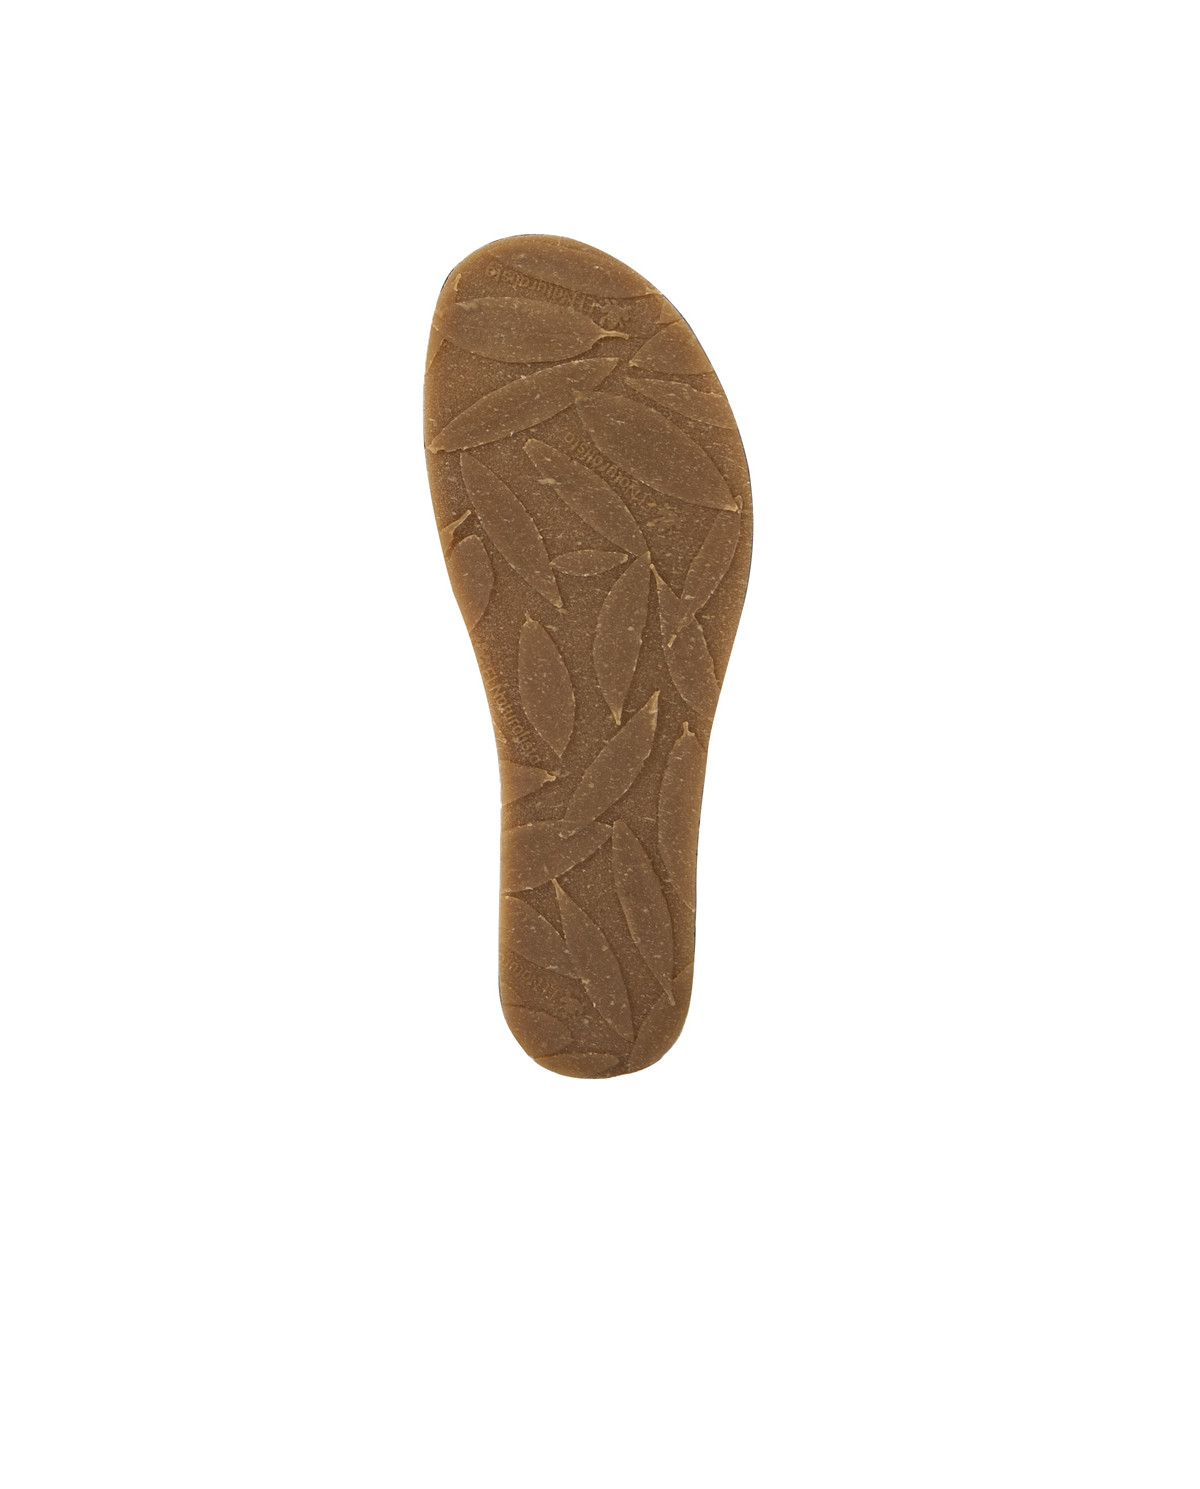 Sandales confortables compensées en cuir suédé - Marron - El naturalista